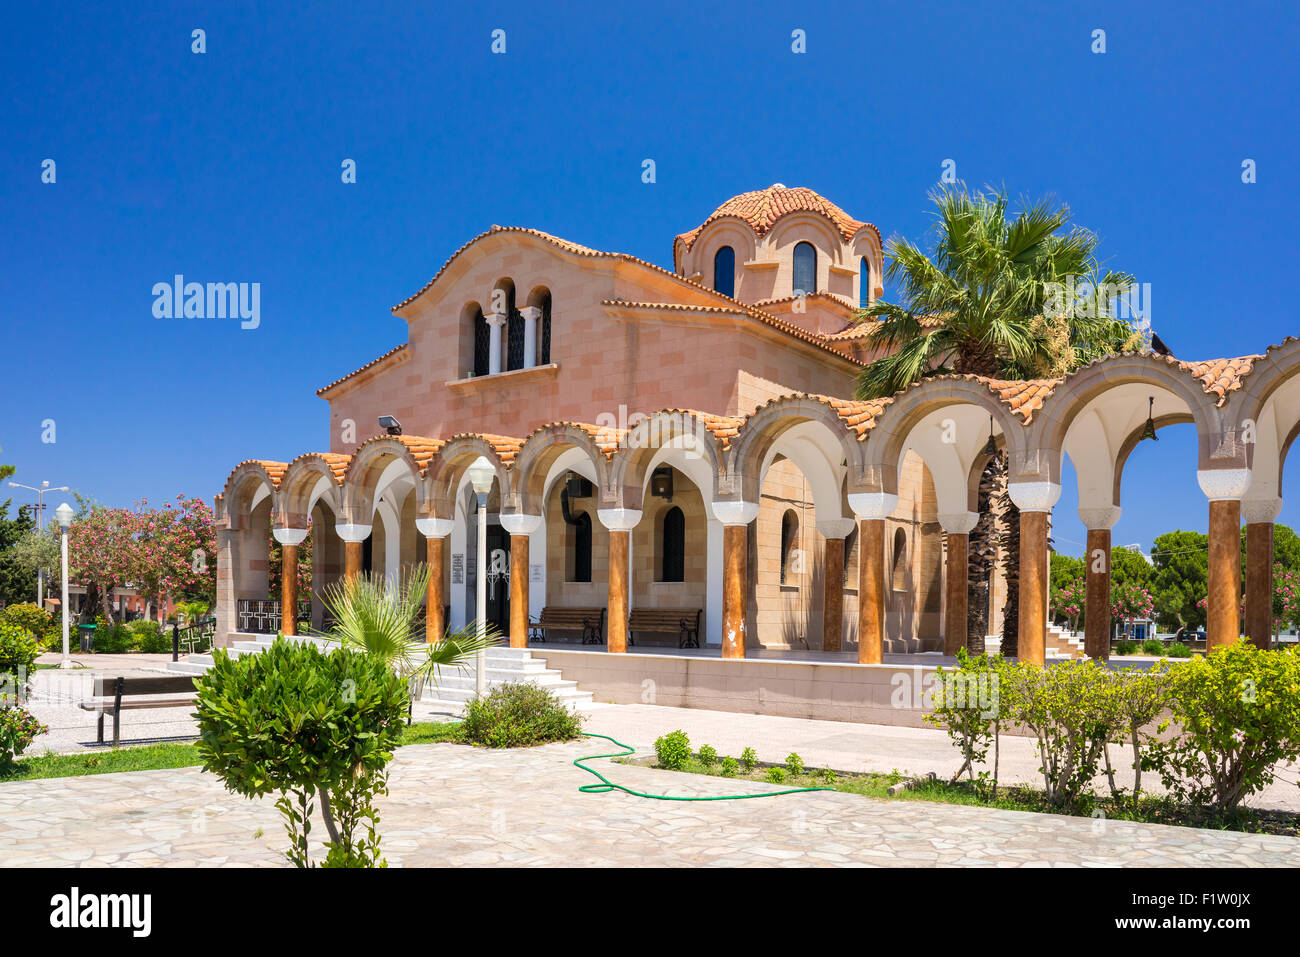 The Church of Saint Nektarios Faliraki Rhodes Greece Stock Photo